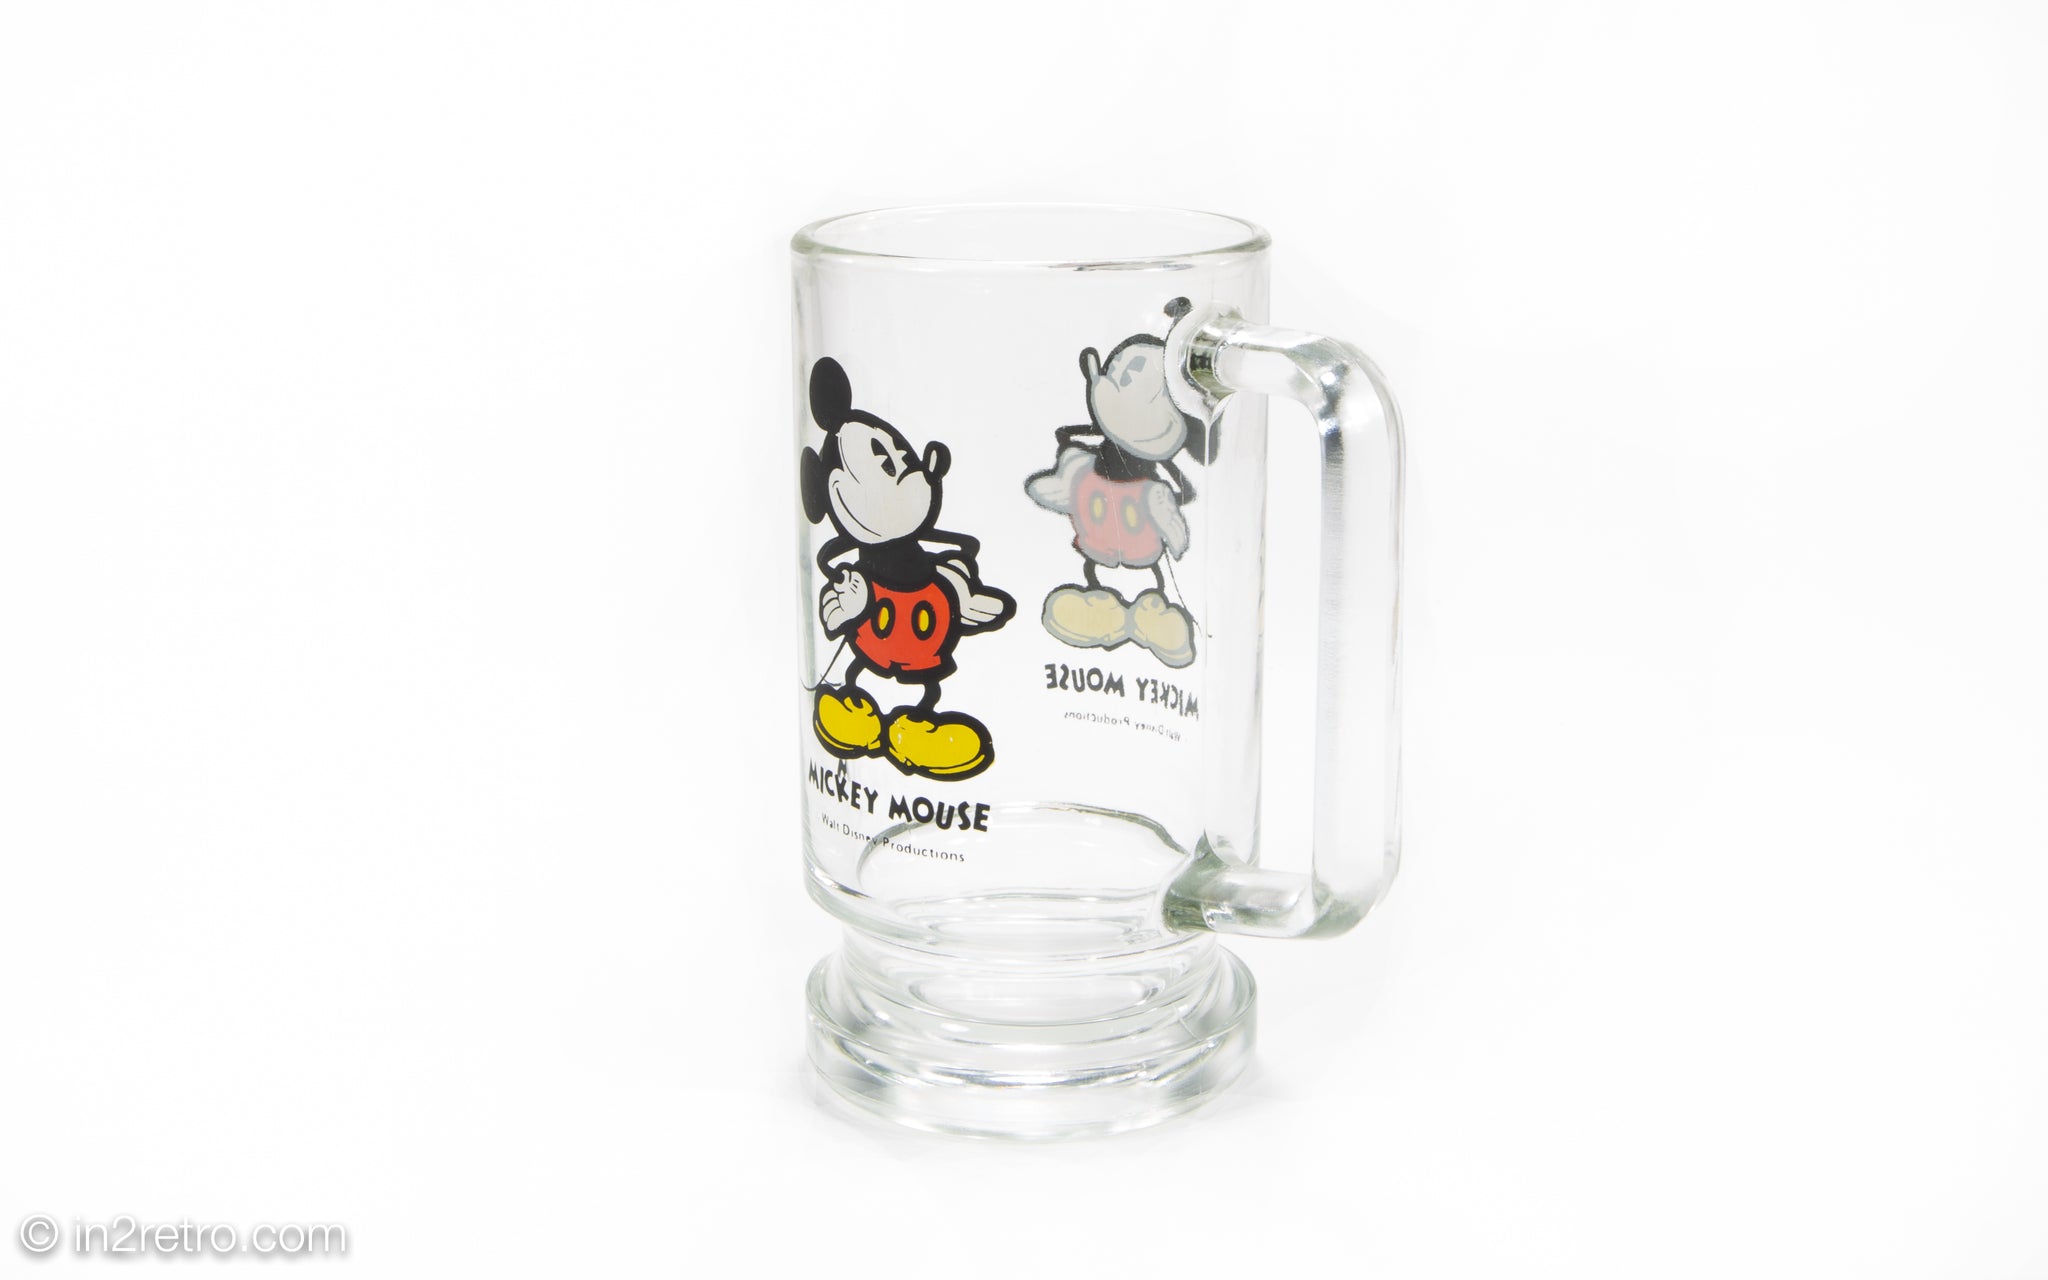 Vintage Kodak Disney Mickey Mouse children's drinking glass —